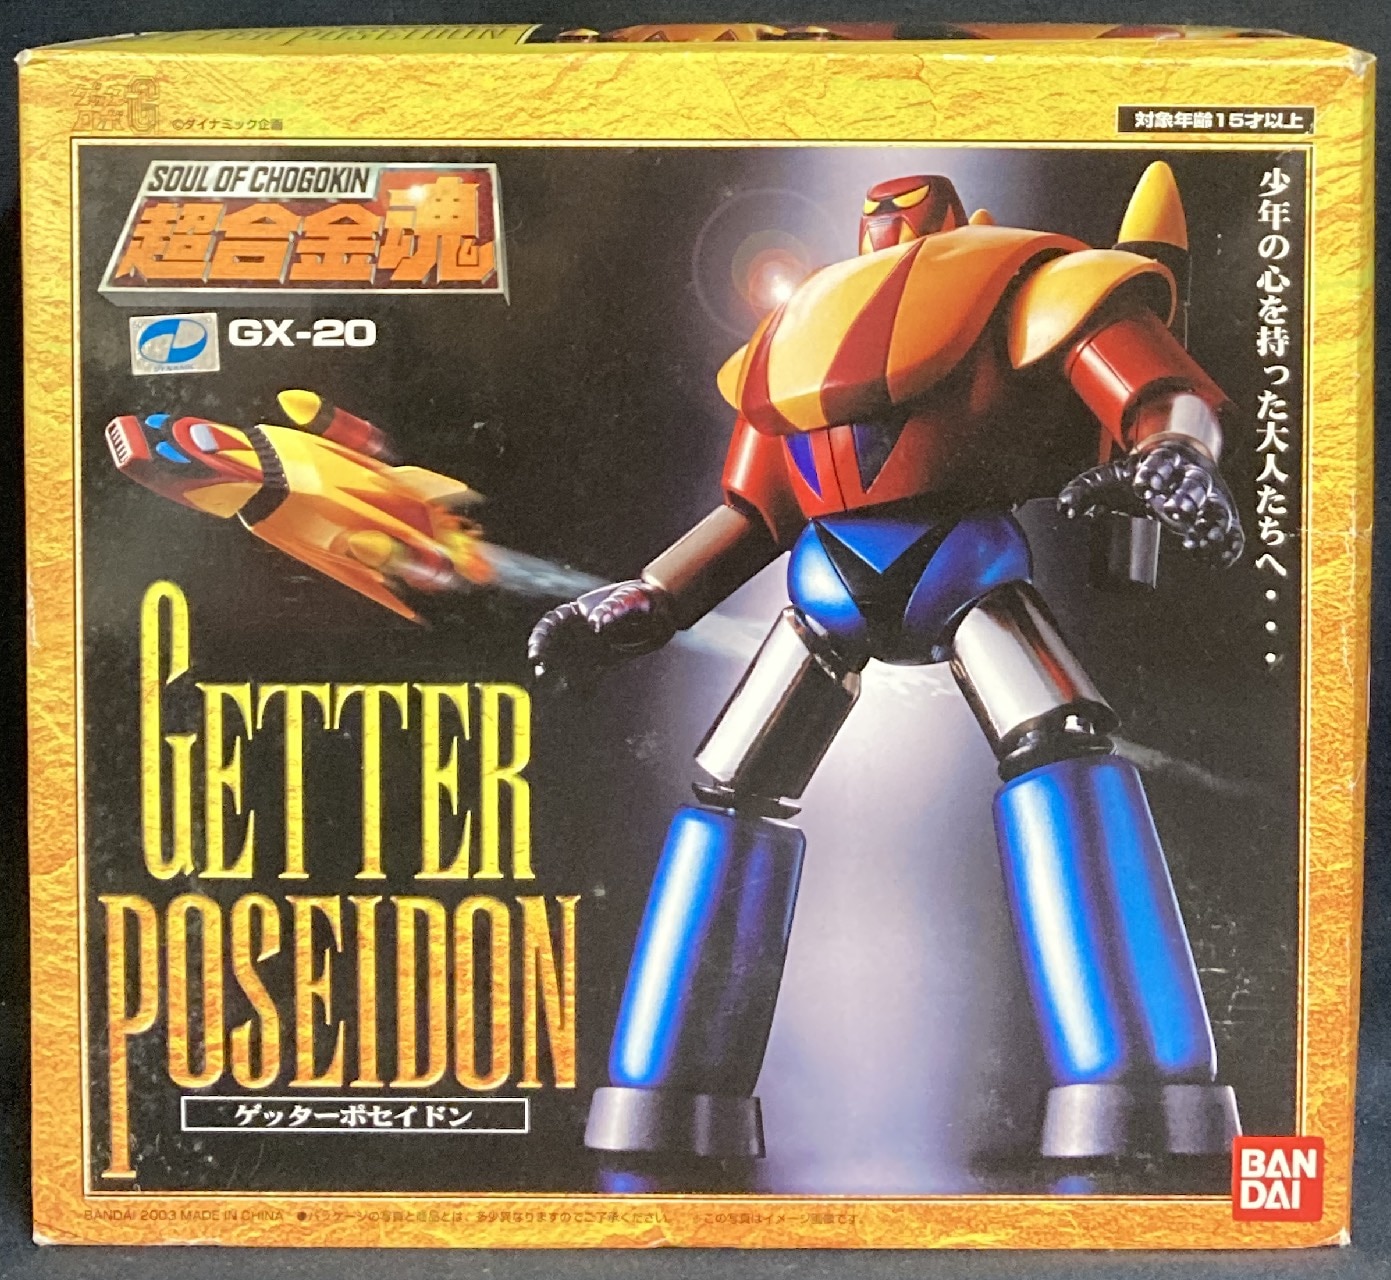 Soul of Chogokin GX-20 GETTER POSEIDON Action Figure Getter Robo G BANDAI Japan 